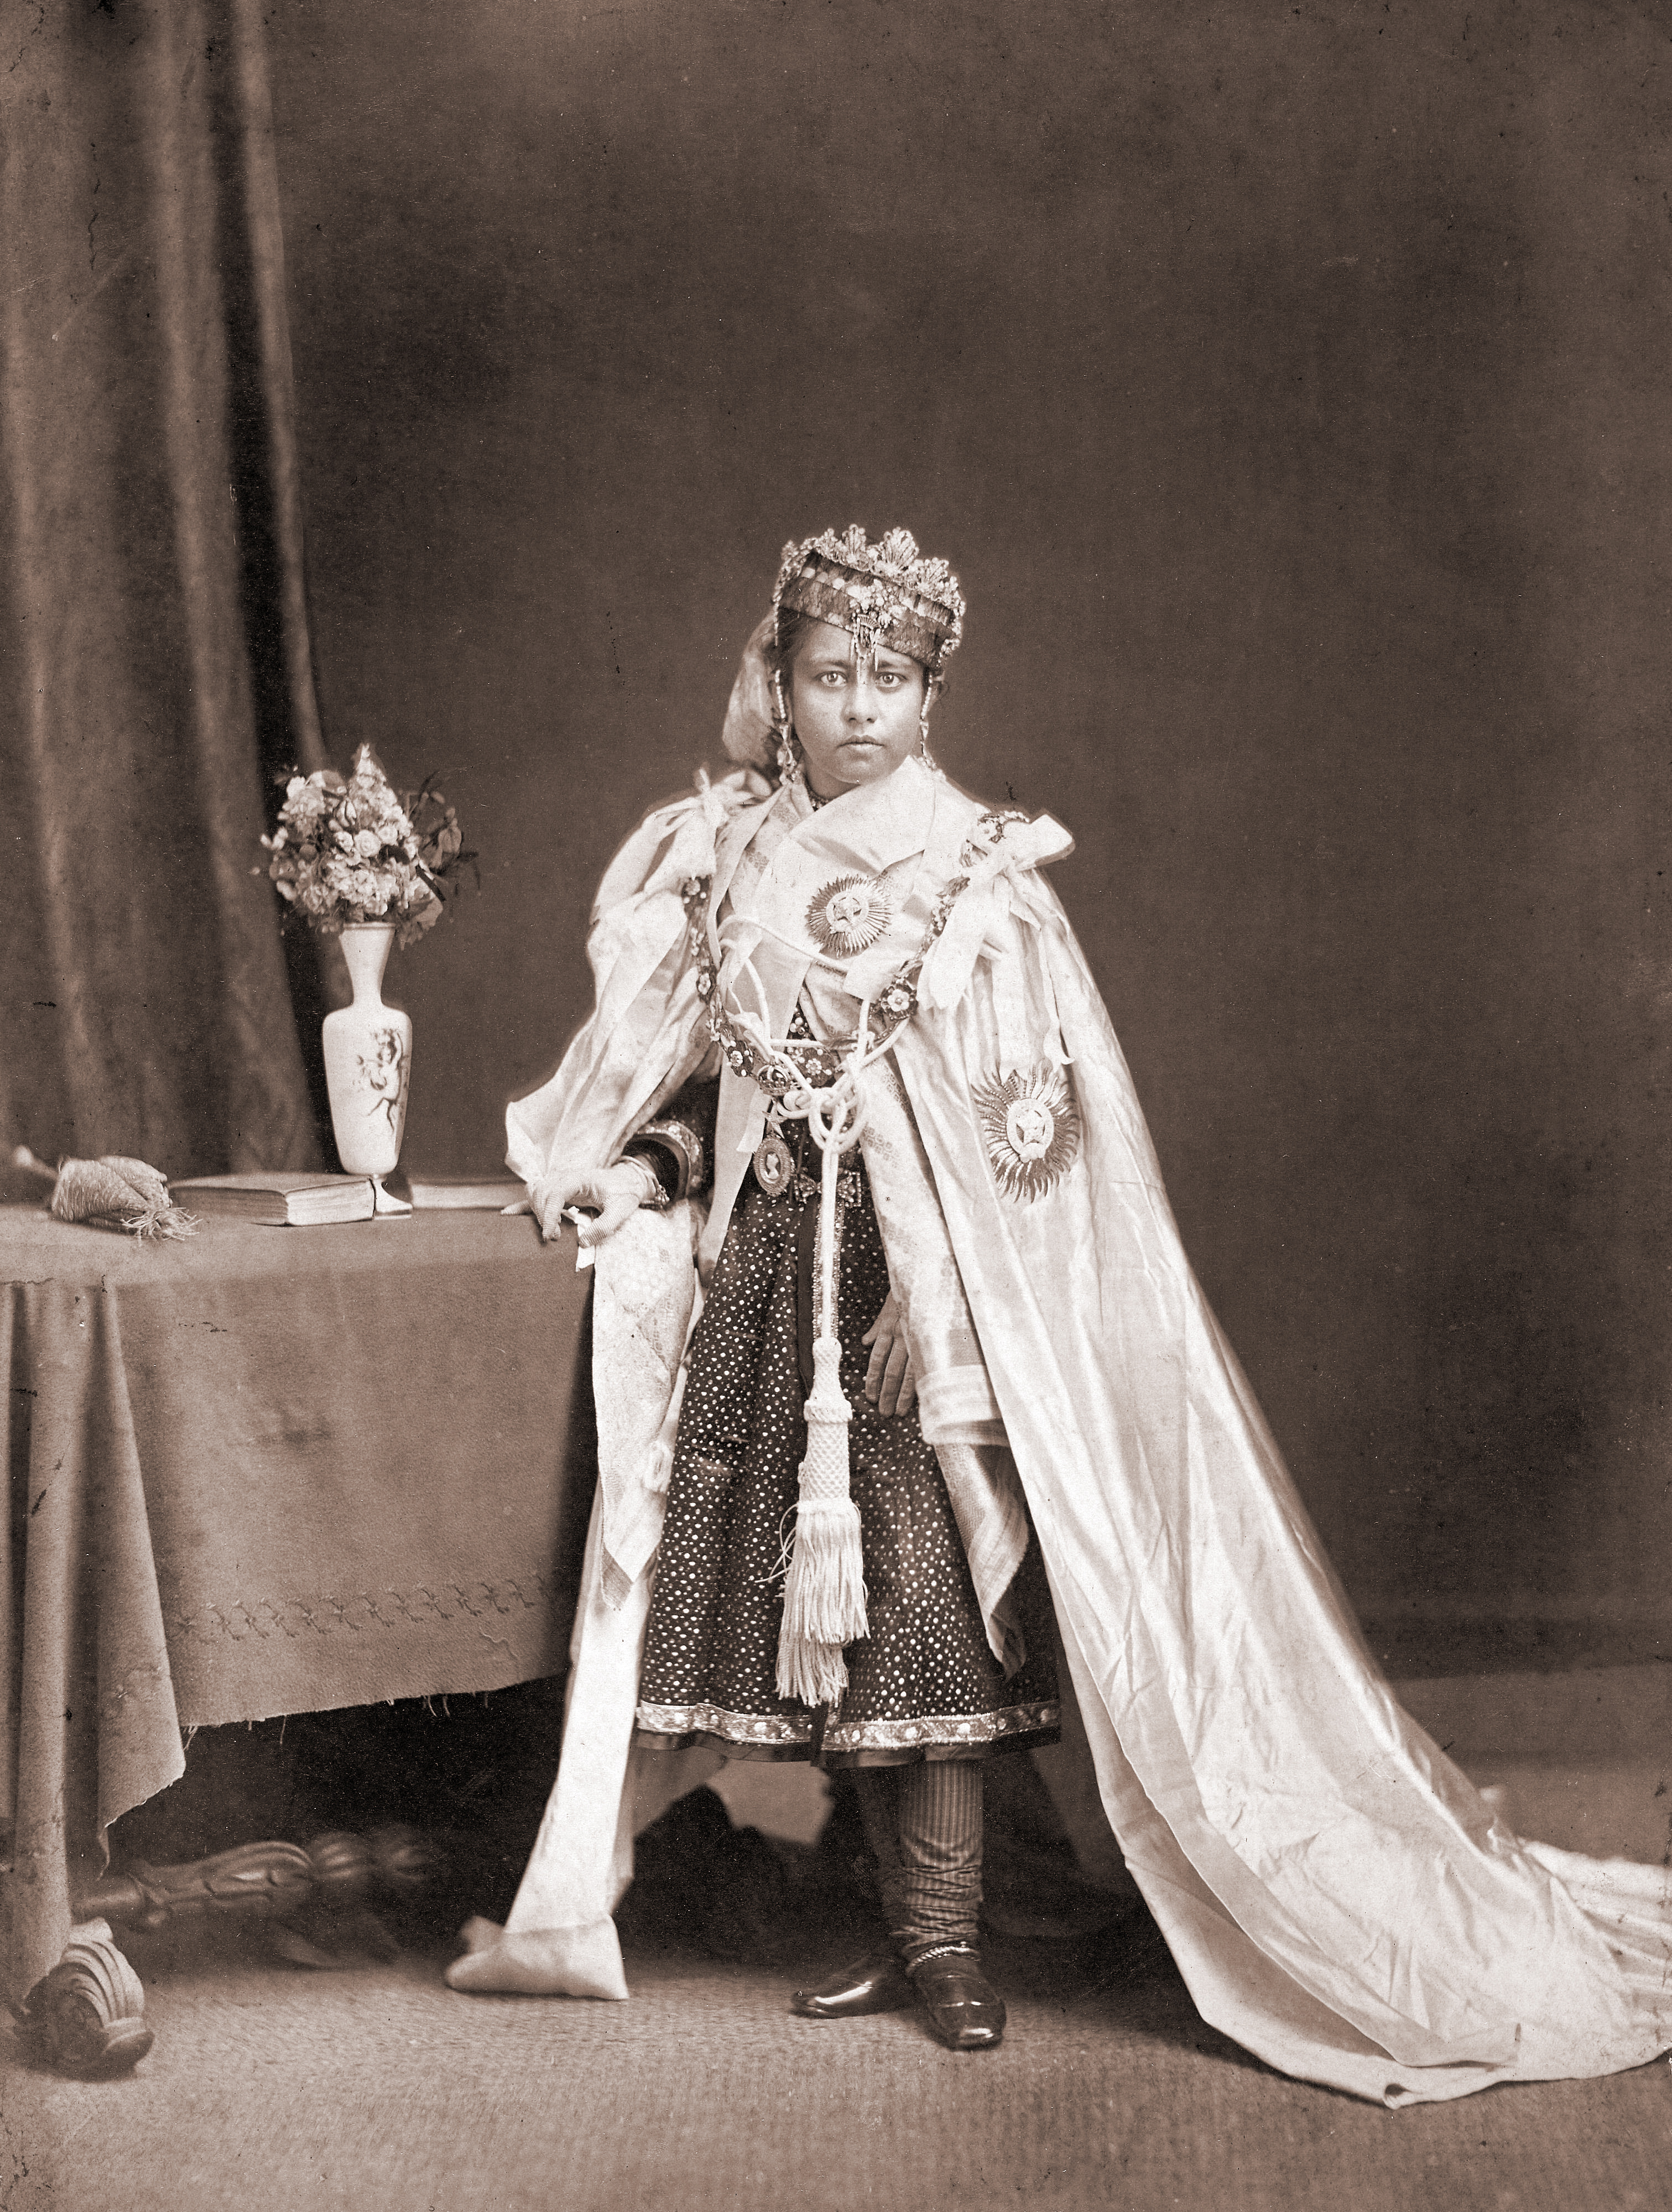 Sultan_Shah_Jahan,_Begum_of_Bhopal,_1872.jpg